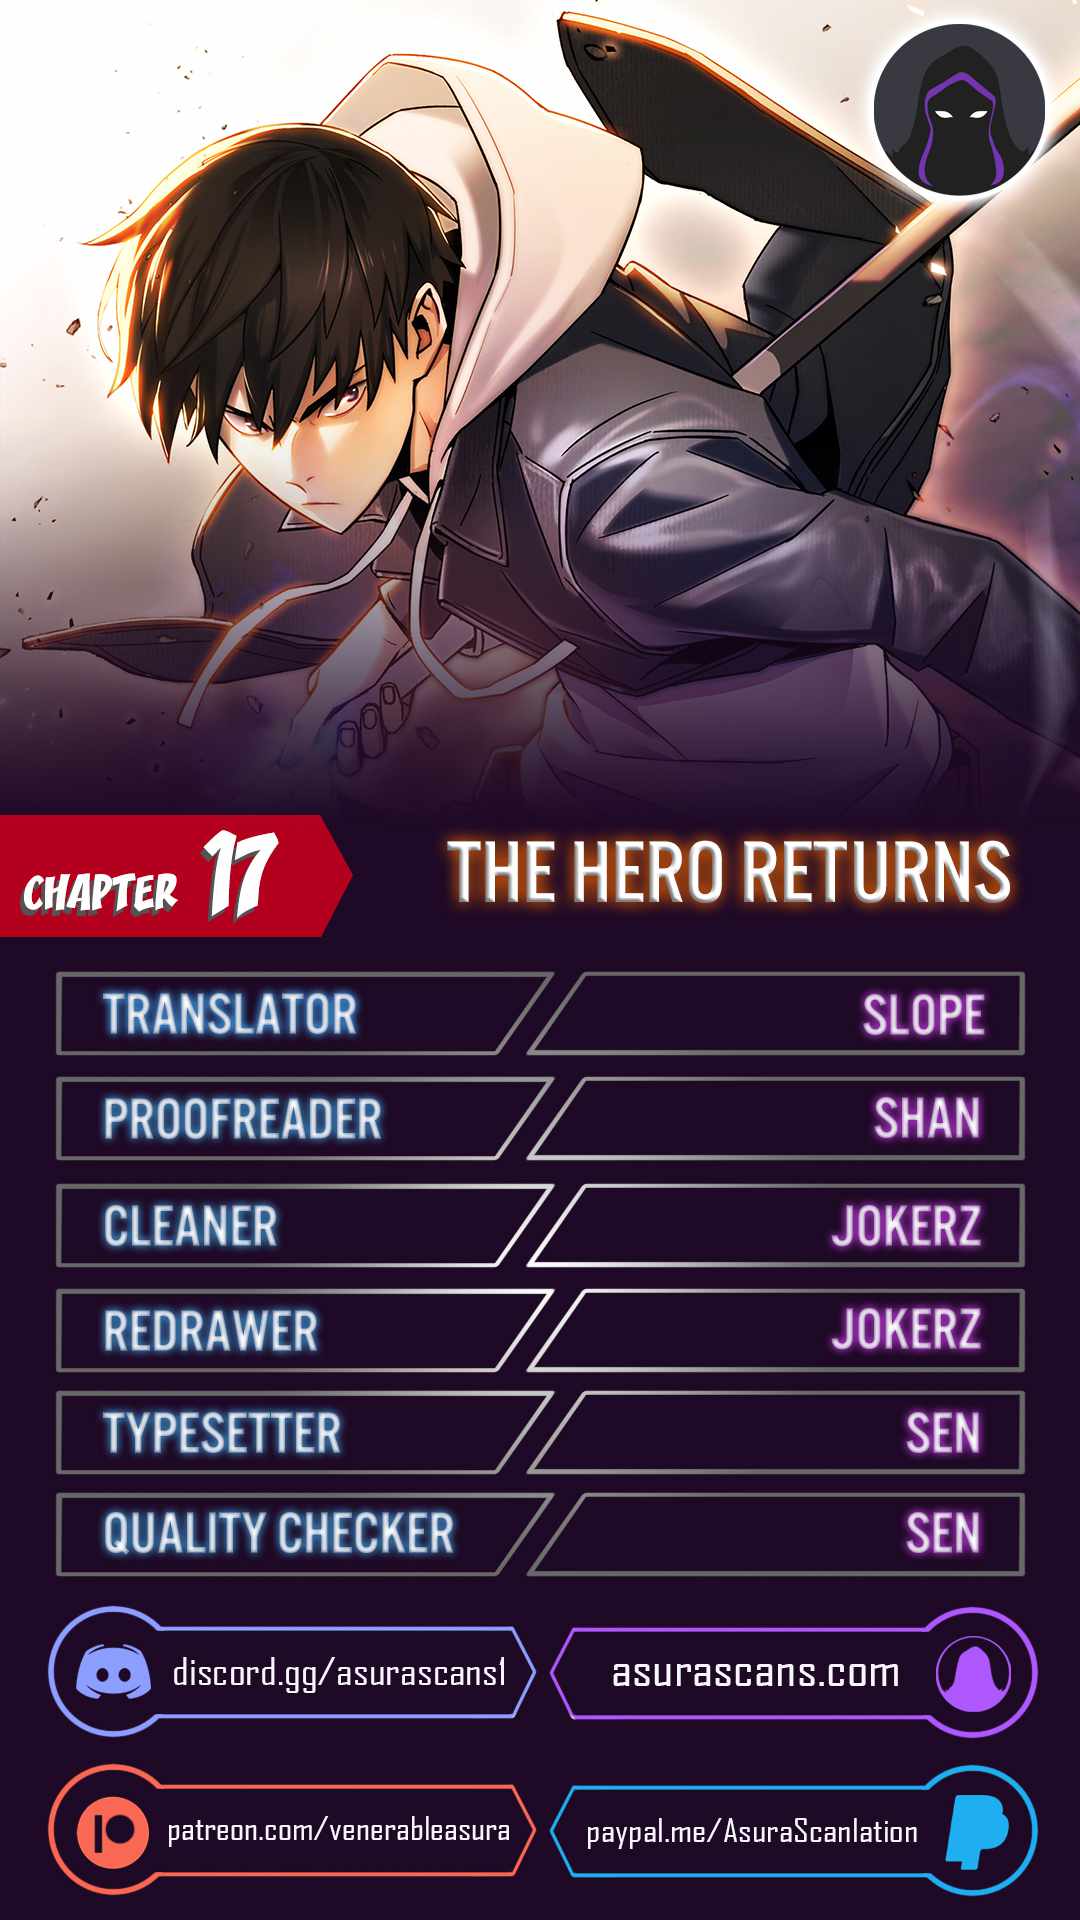 The Hero Returns chapter 17